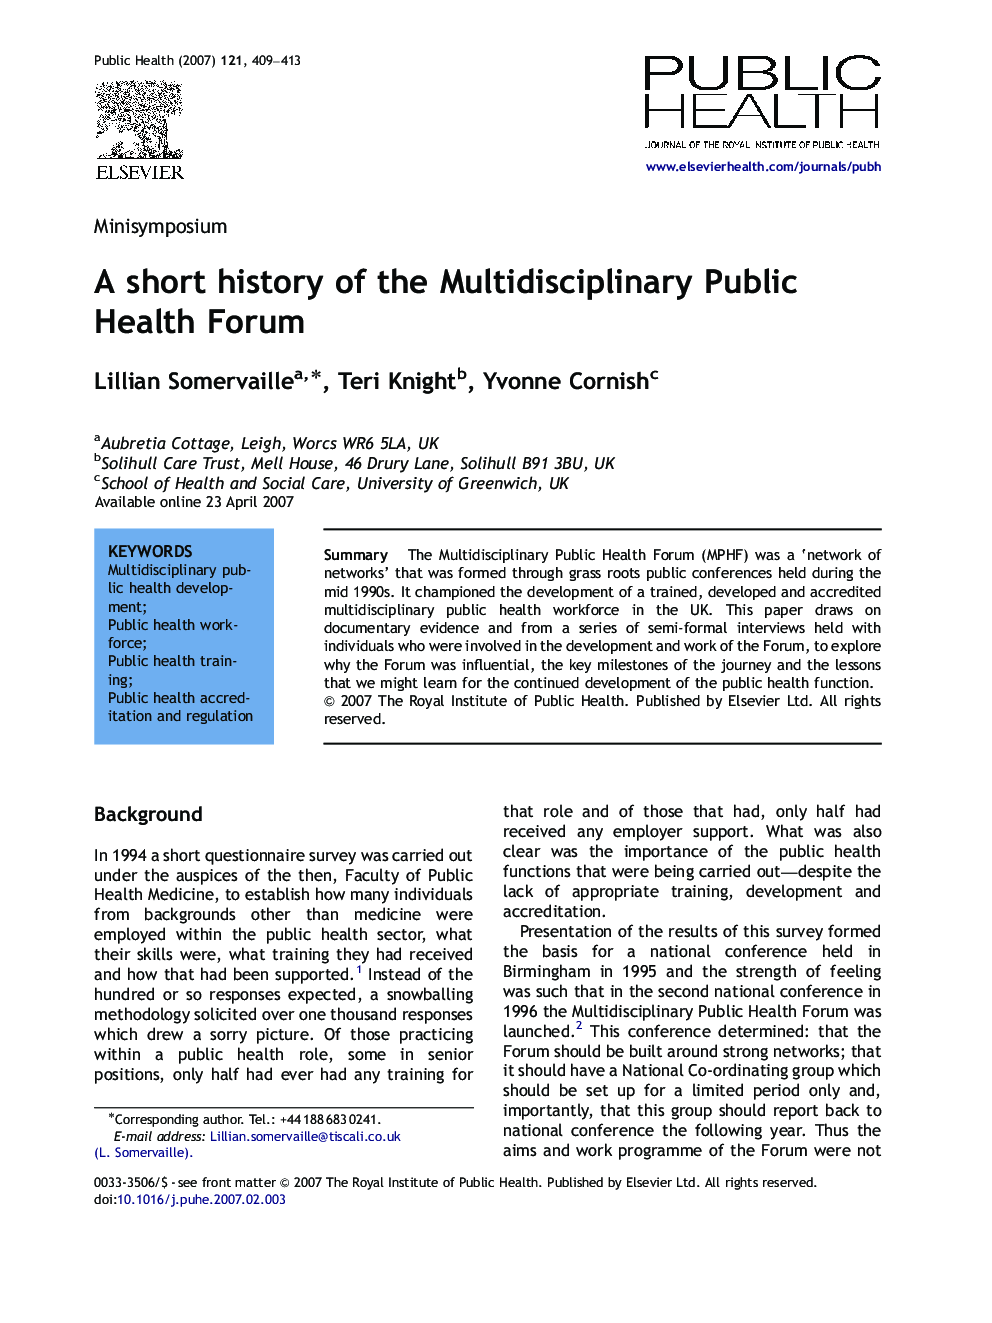 A short history of the Multidisciplinary Public Health Forum